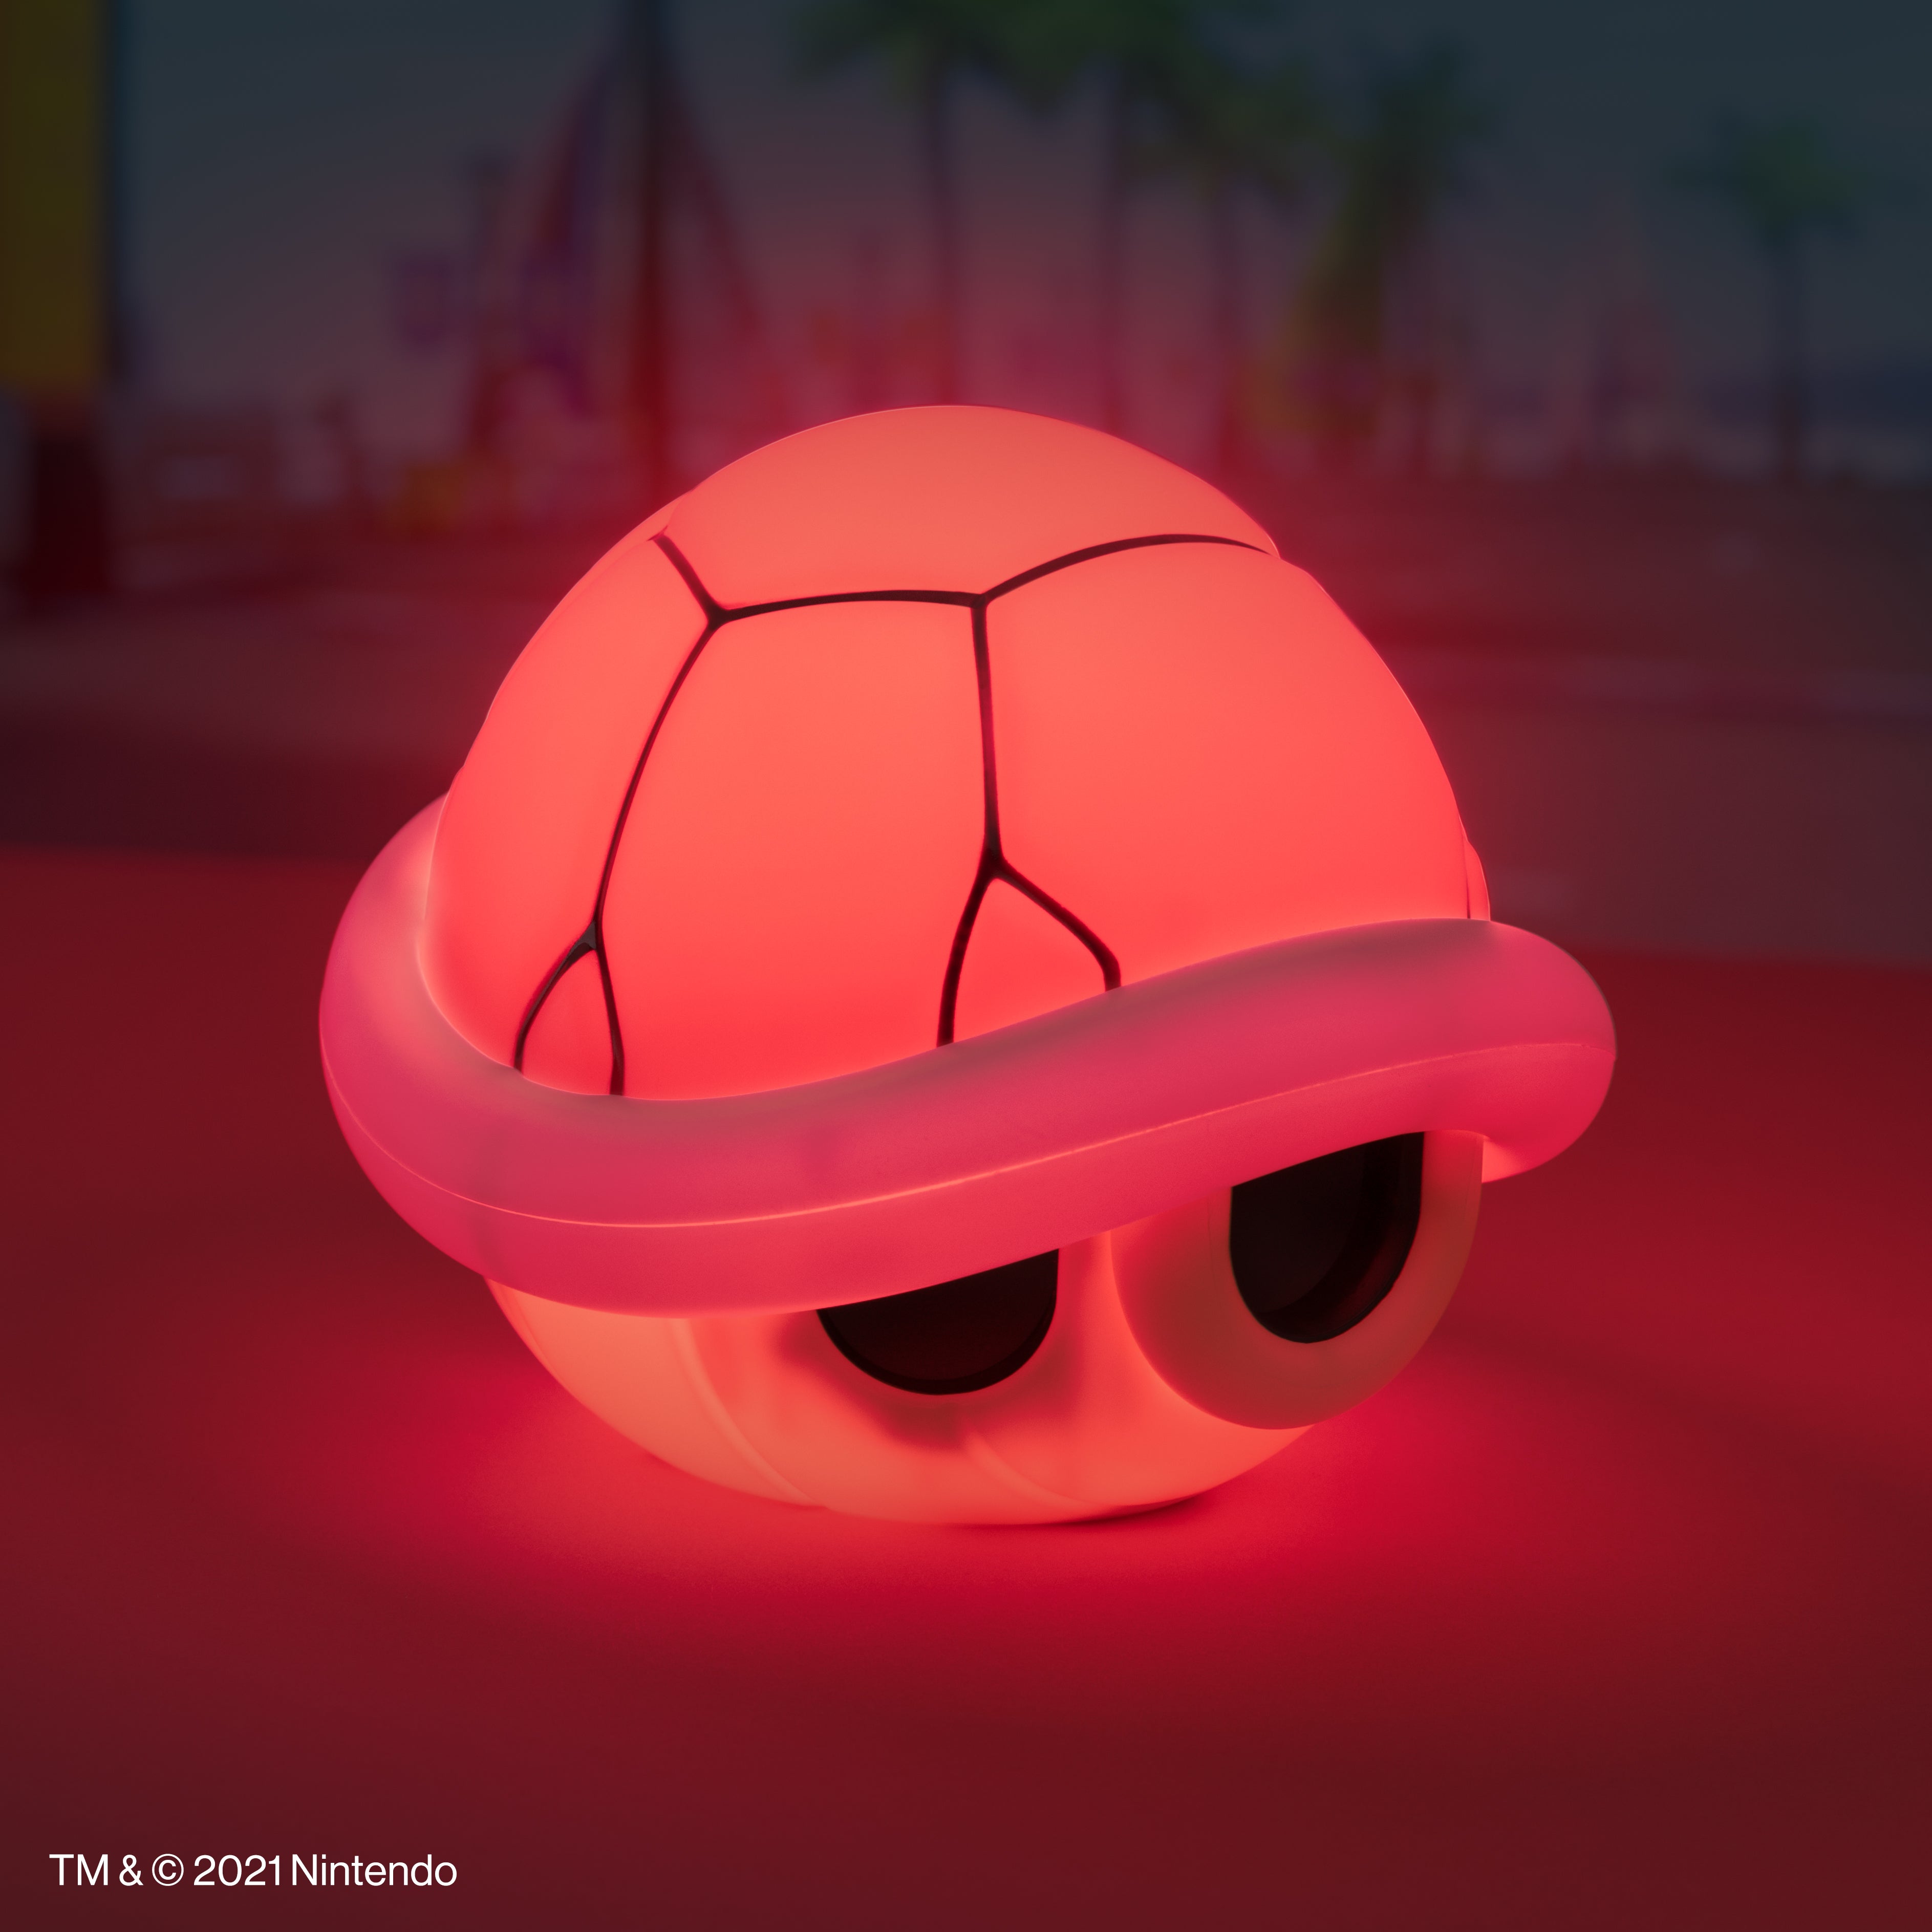 Mario Kart Red Shell Light